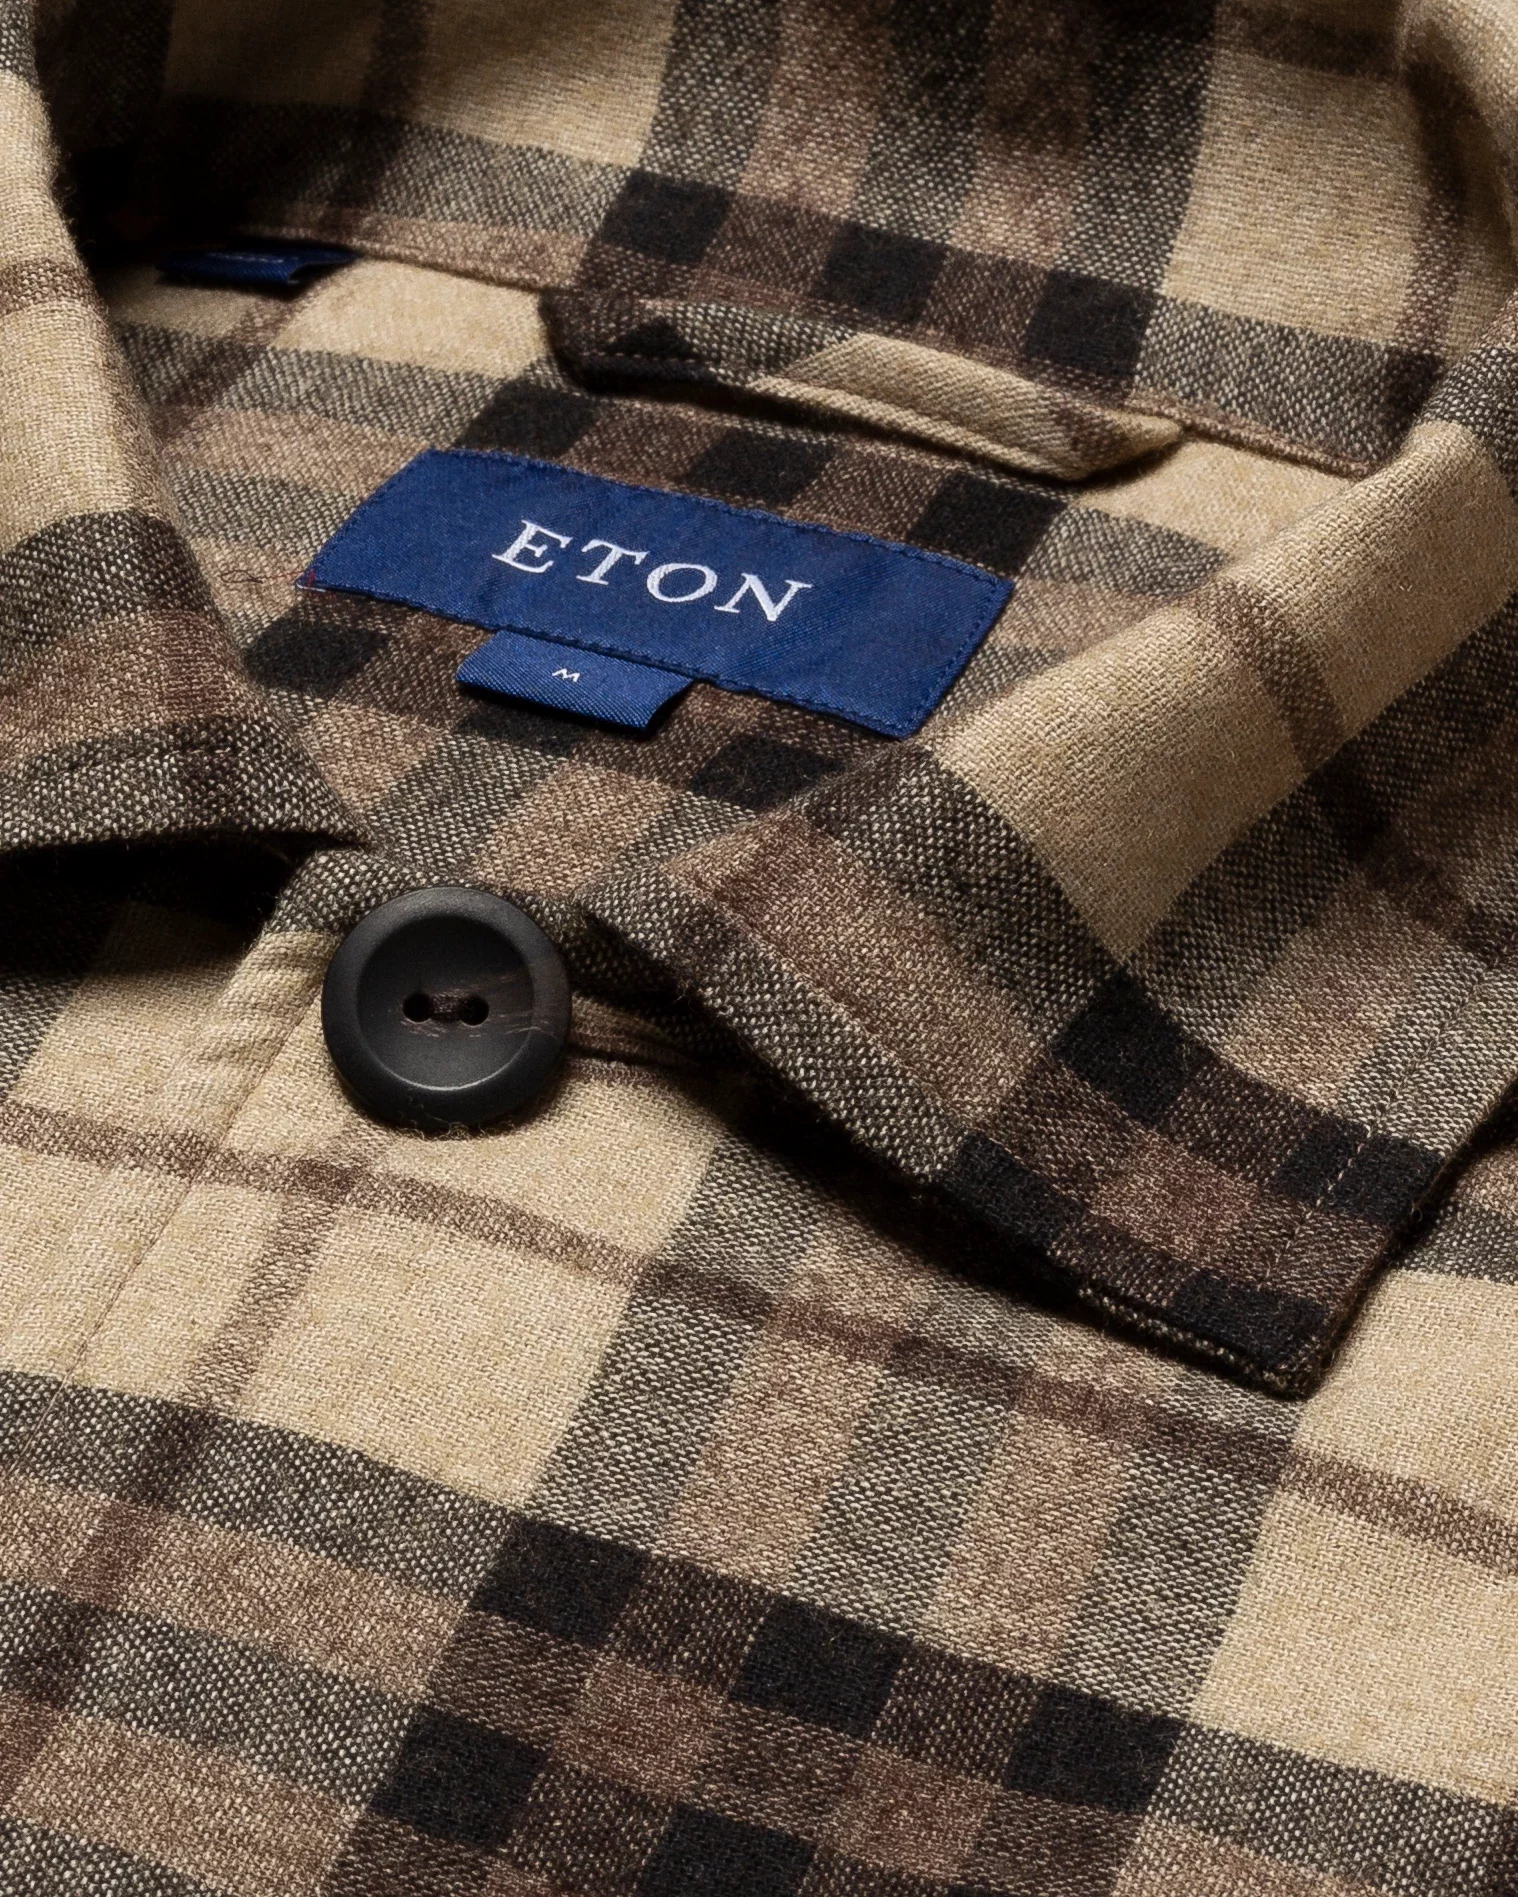 Eton - brown checked cotton wool cashmere overshirt turn down single cuff pointed strap regular